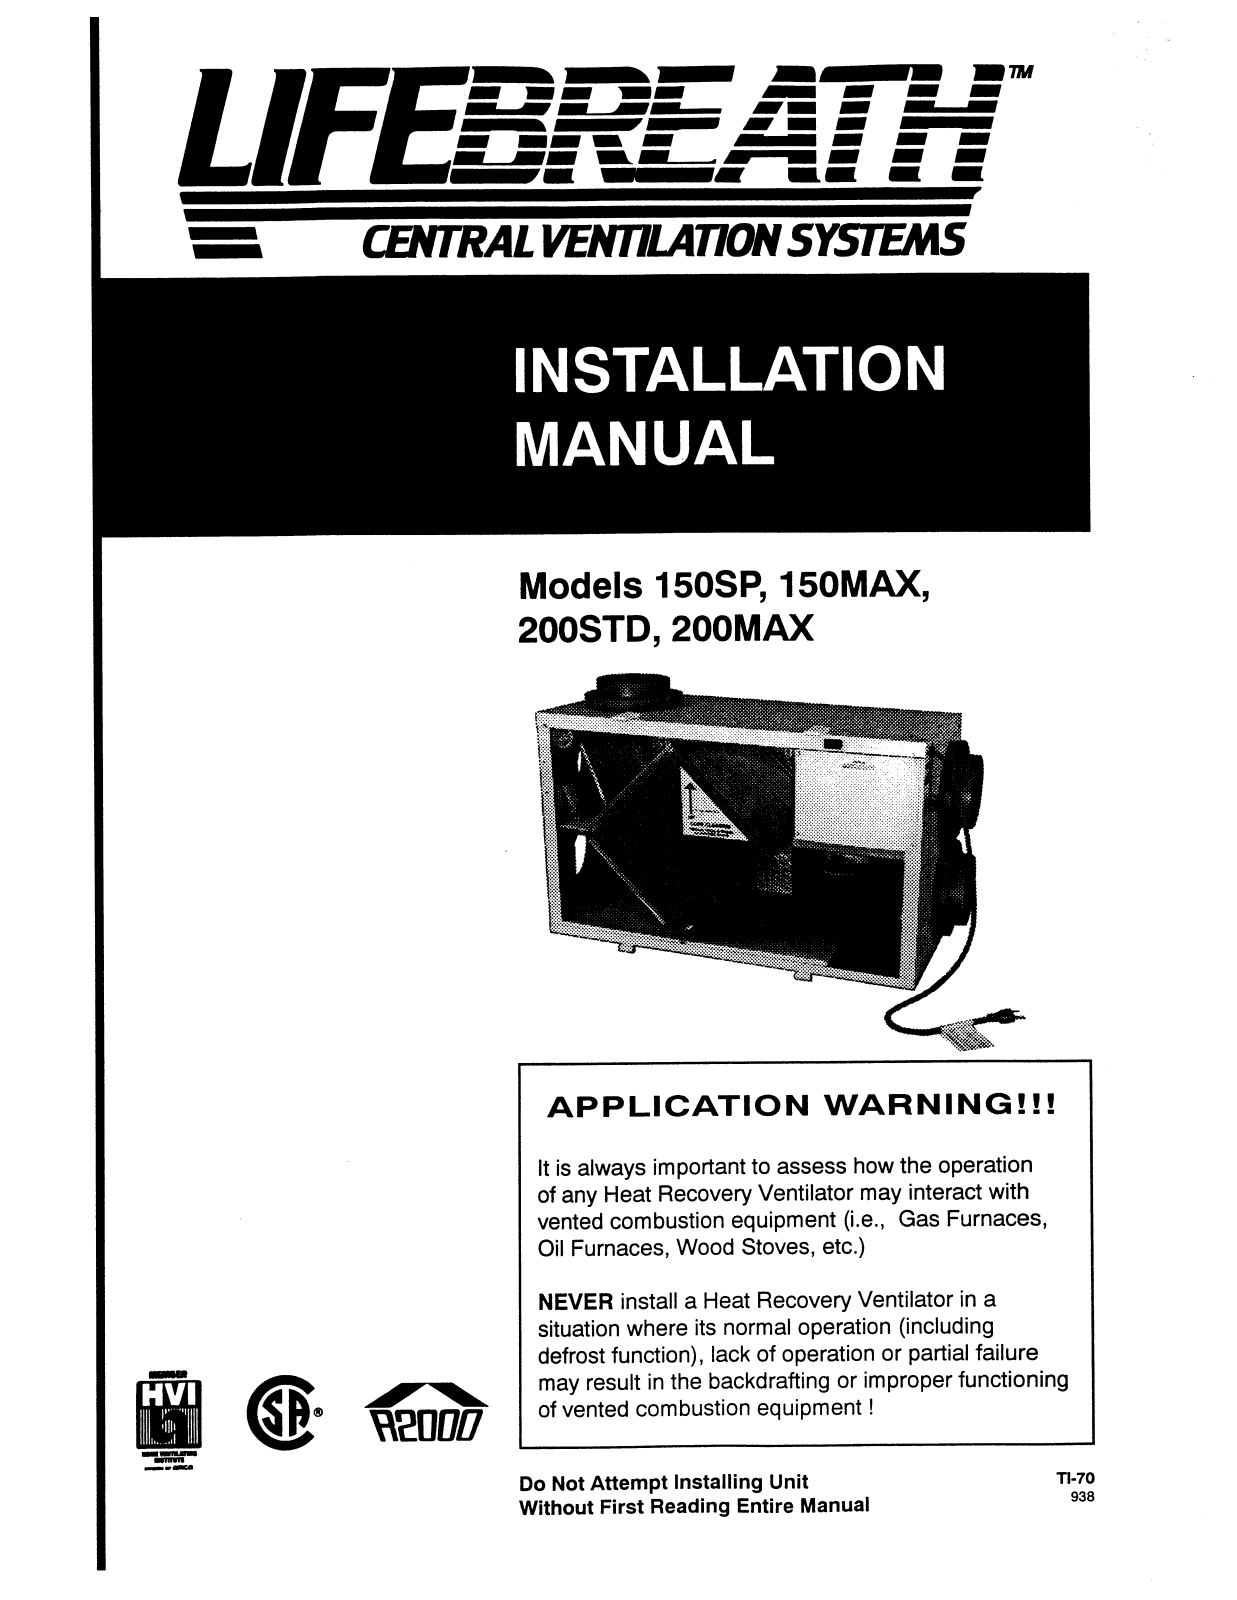 Lifebreath 150SP, 200STD, CONTROLAIR 15, 150MAX User Manual